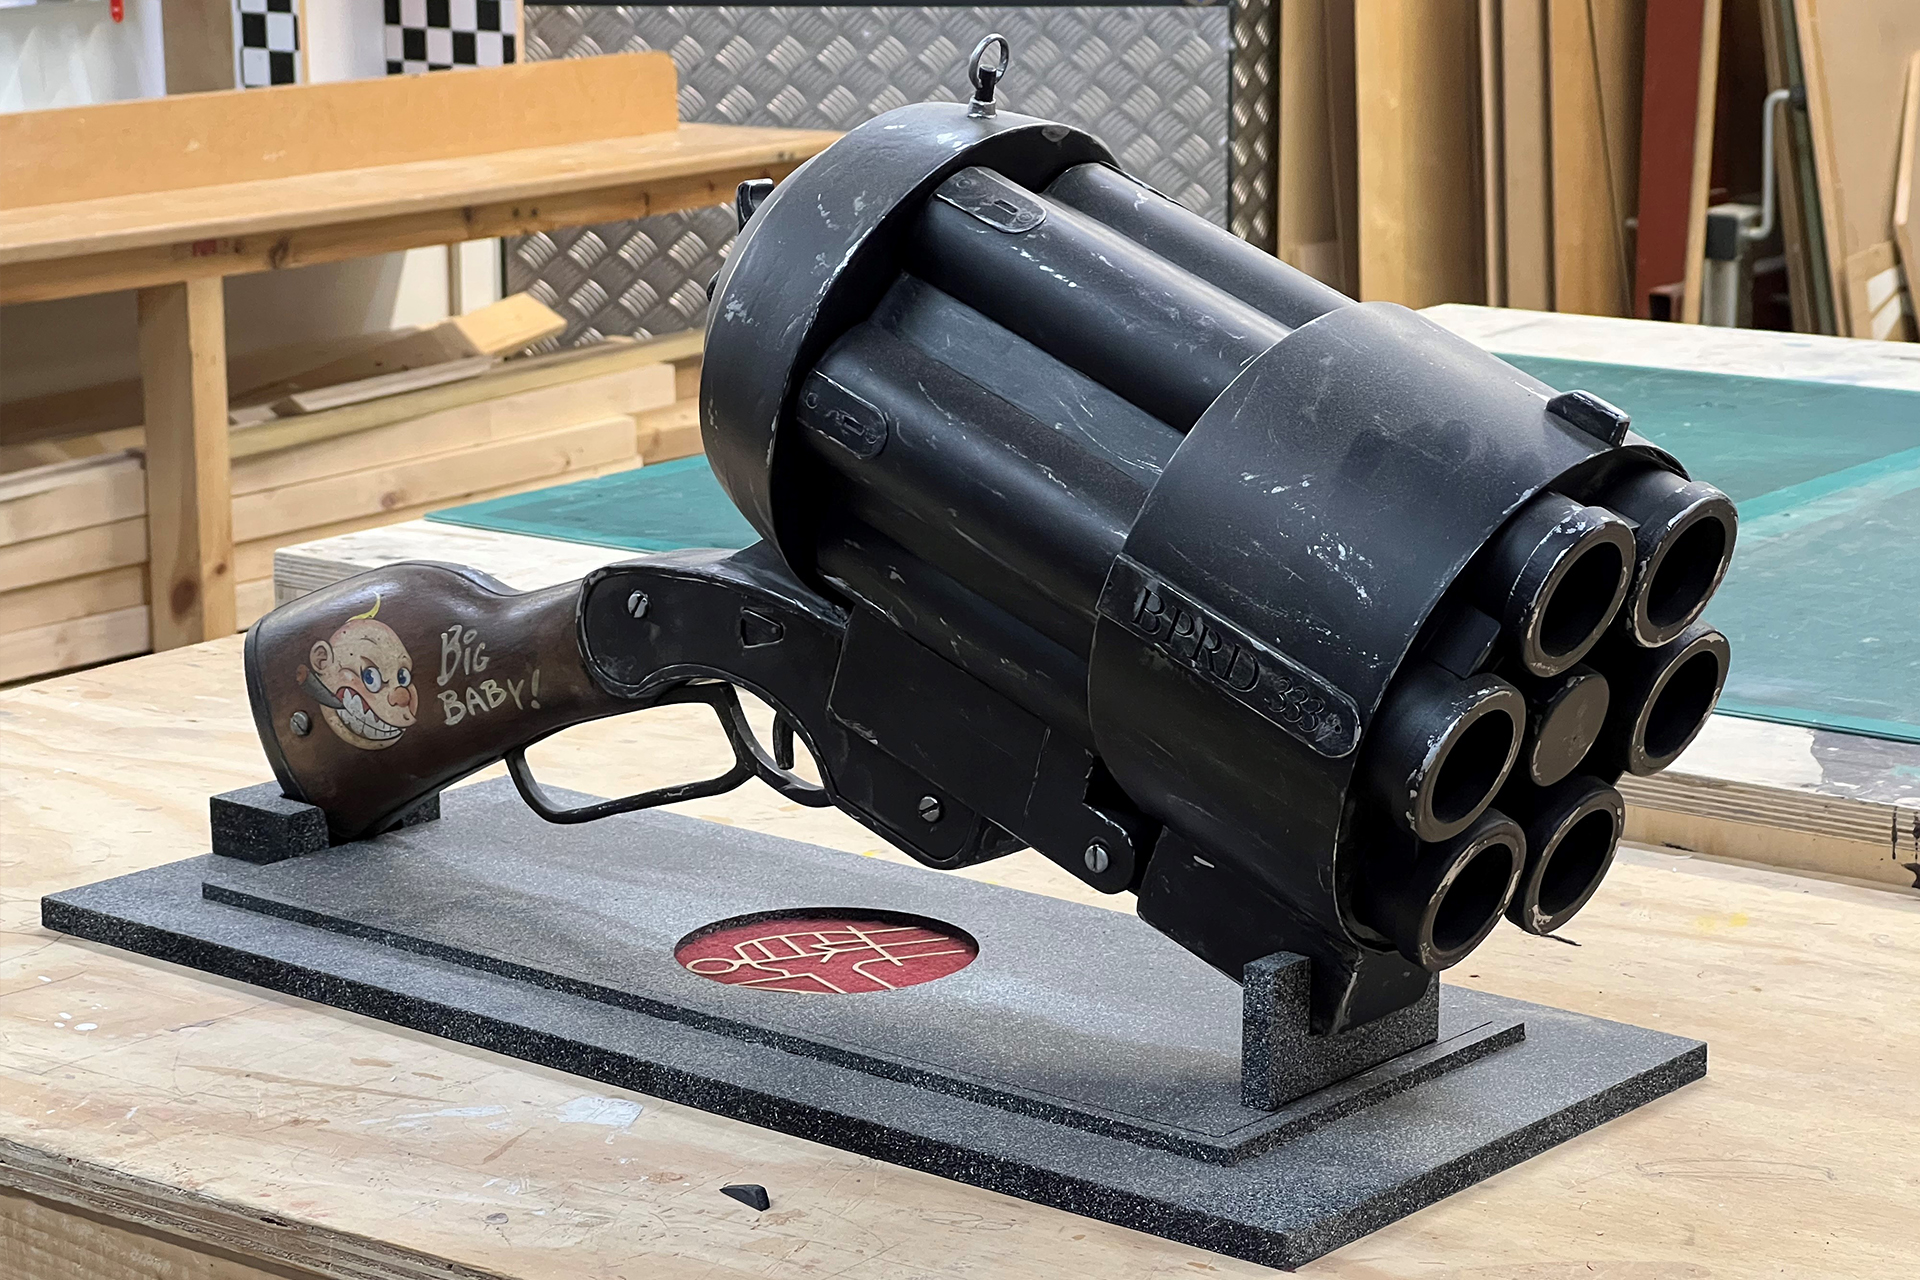 Replica model 'Hellboy' gun